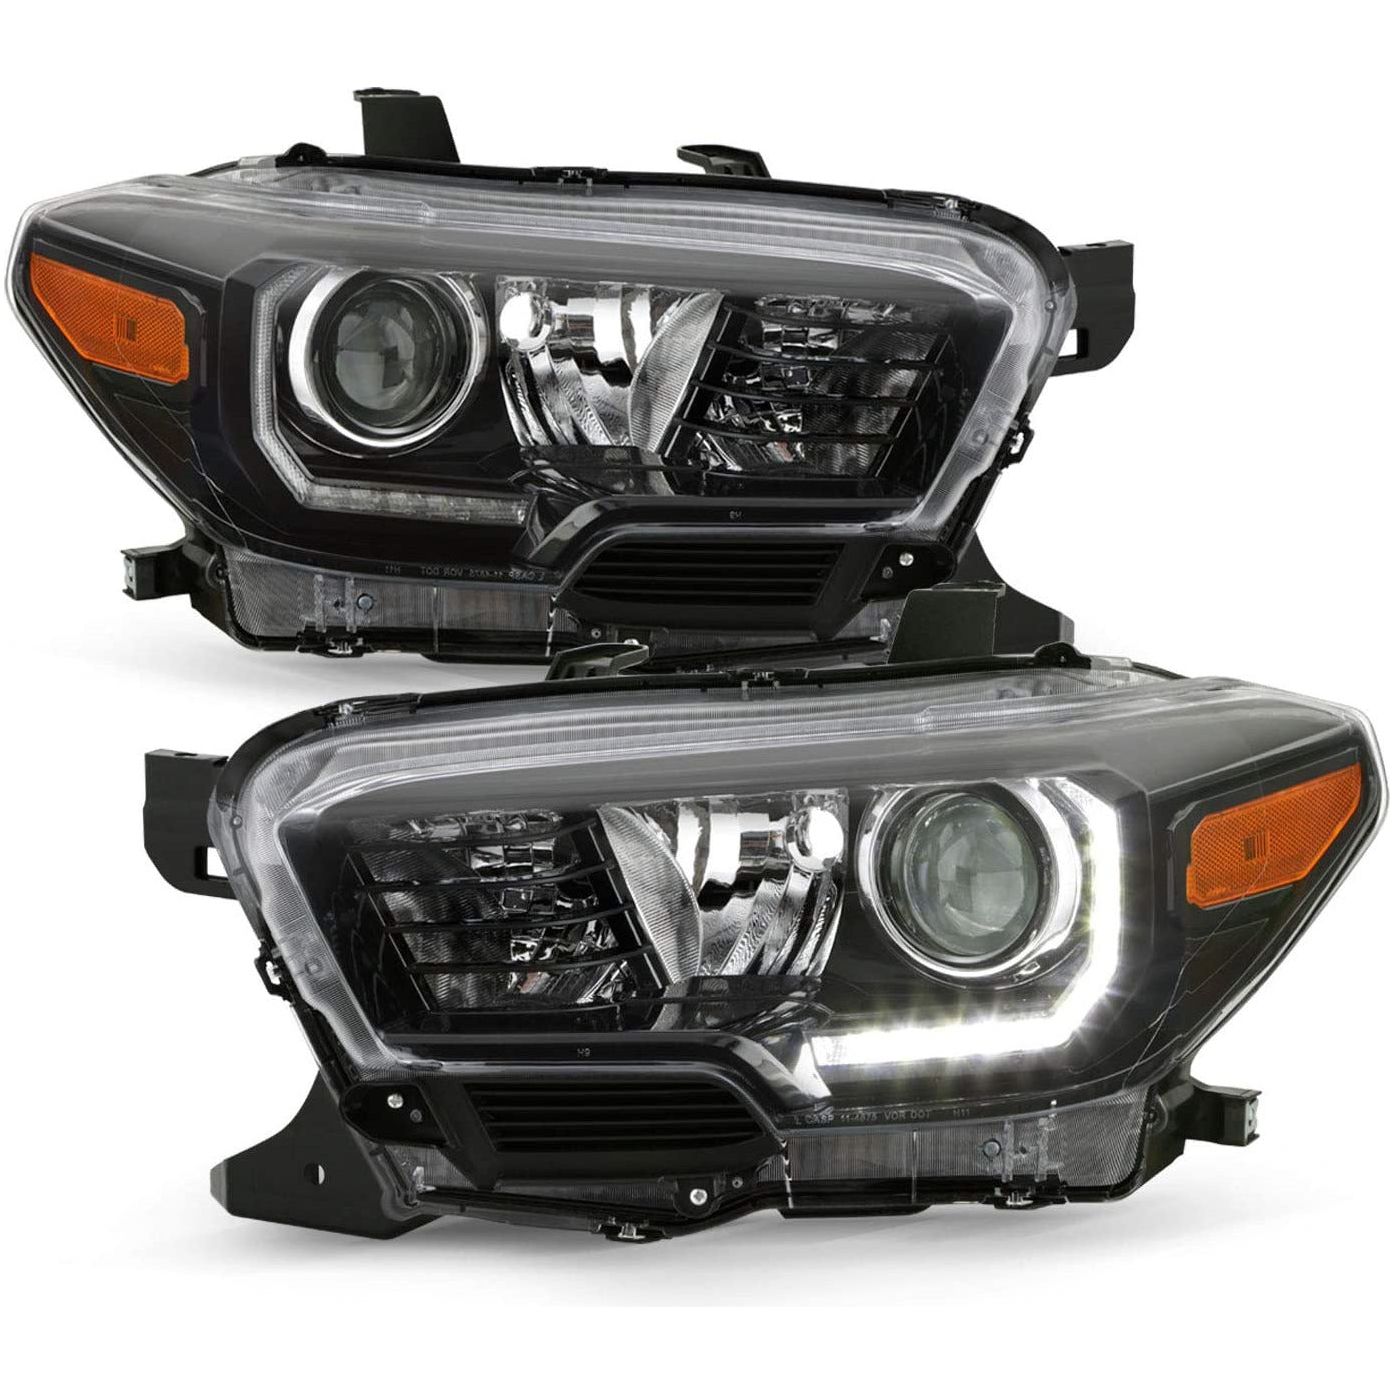 2016-2020 Toyota Tacoma Headlights | Black Headlights | W/ DRL - Truck Accessories Guy